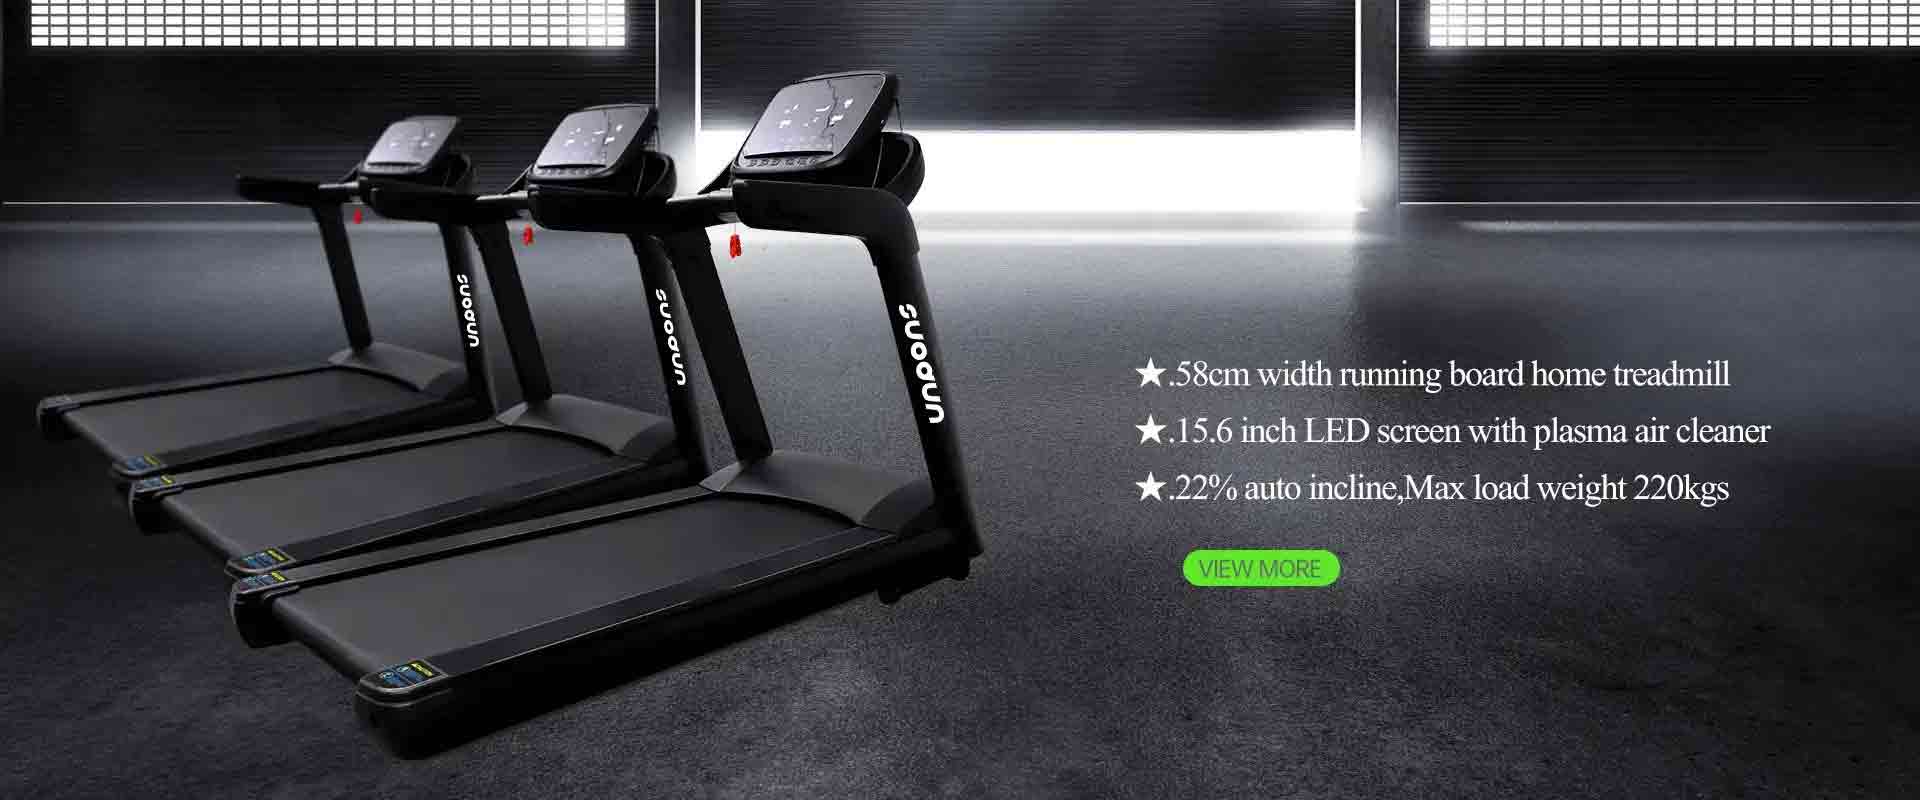 commercial treadmill display